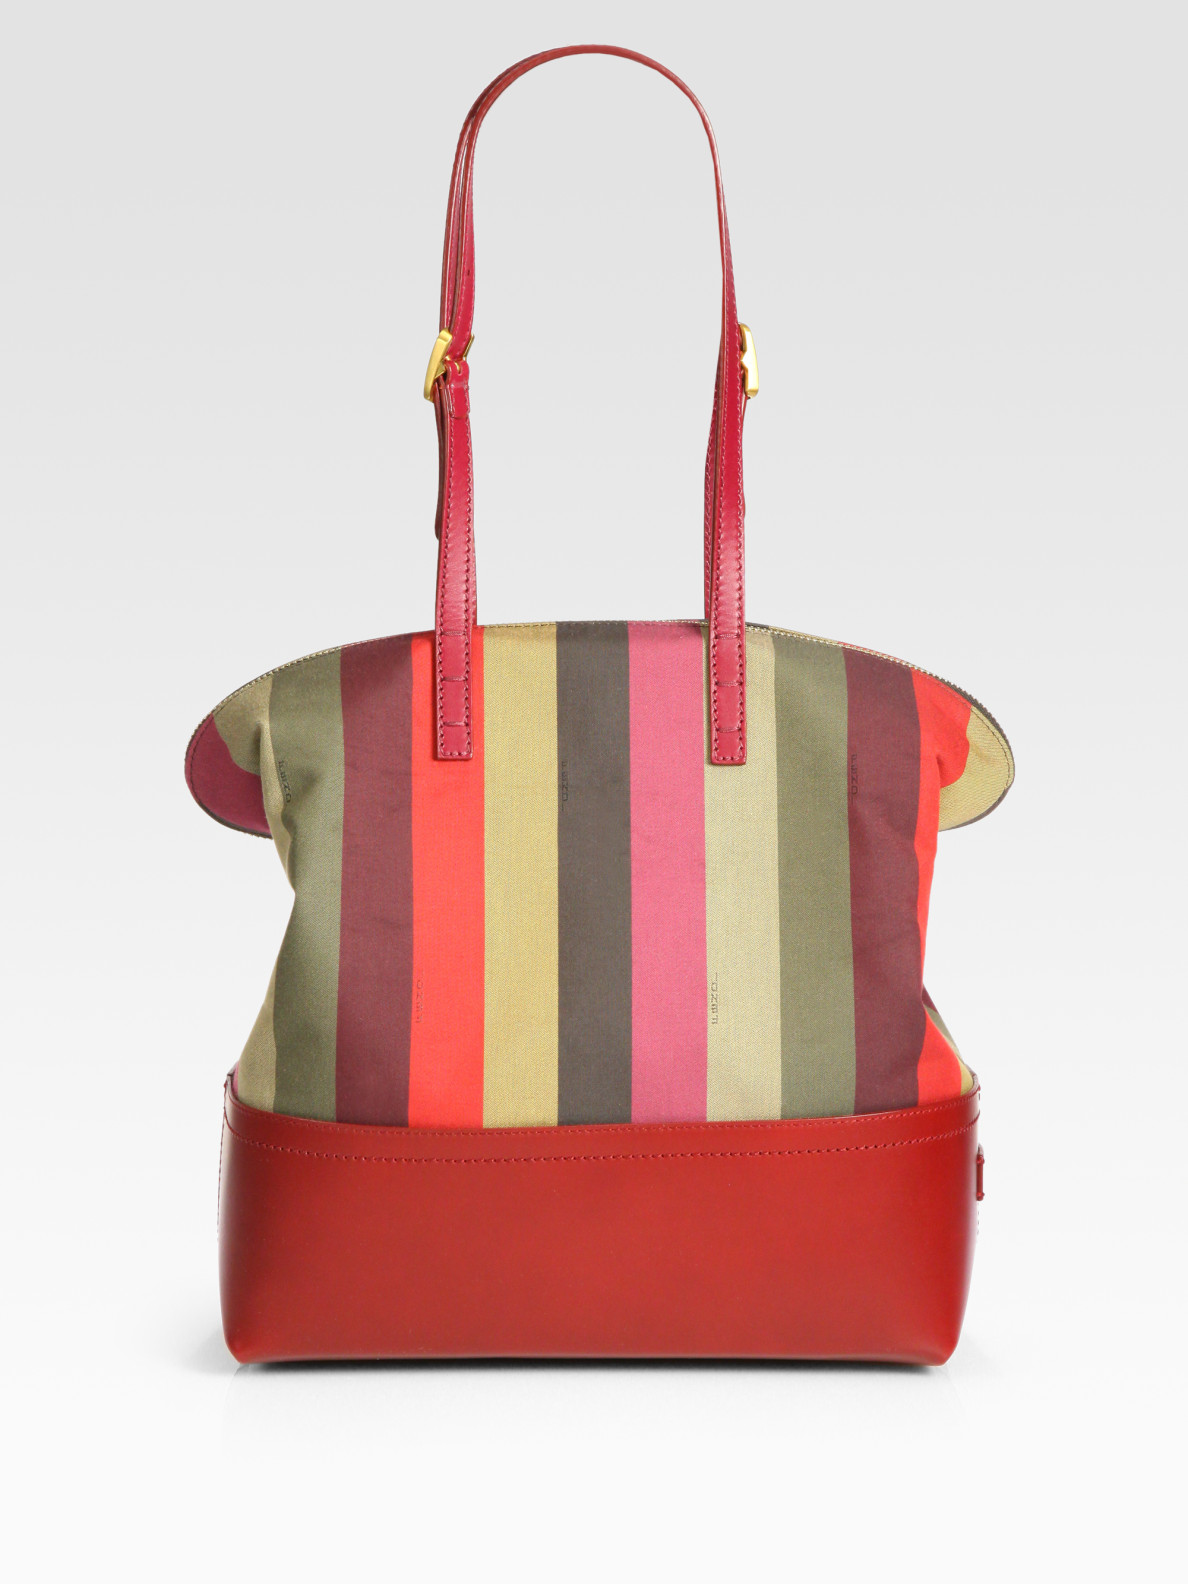 Fendi Pequin 2 Canvas Leather Shoulder Bag in Multicolor (red) | Lyst